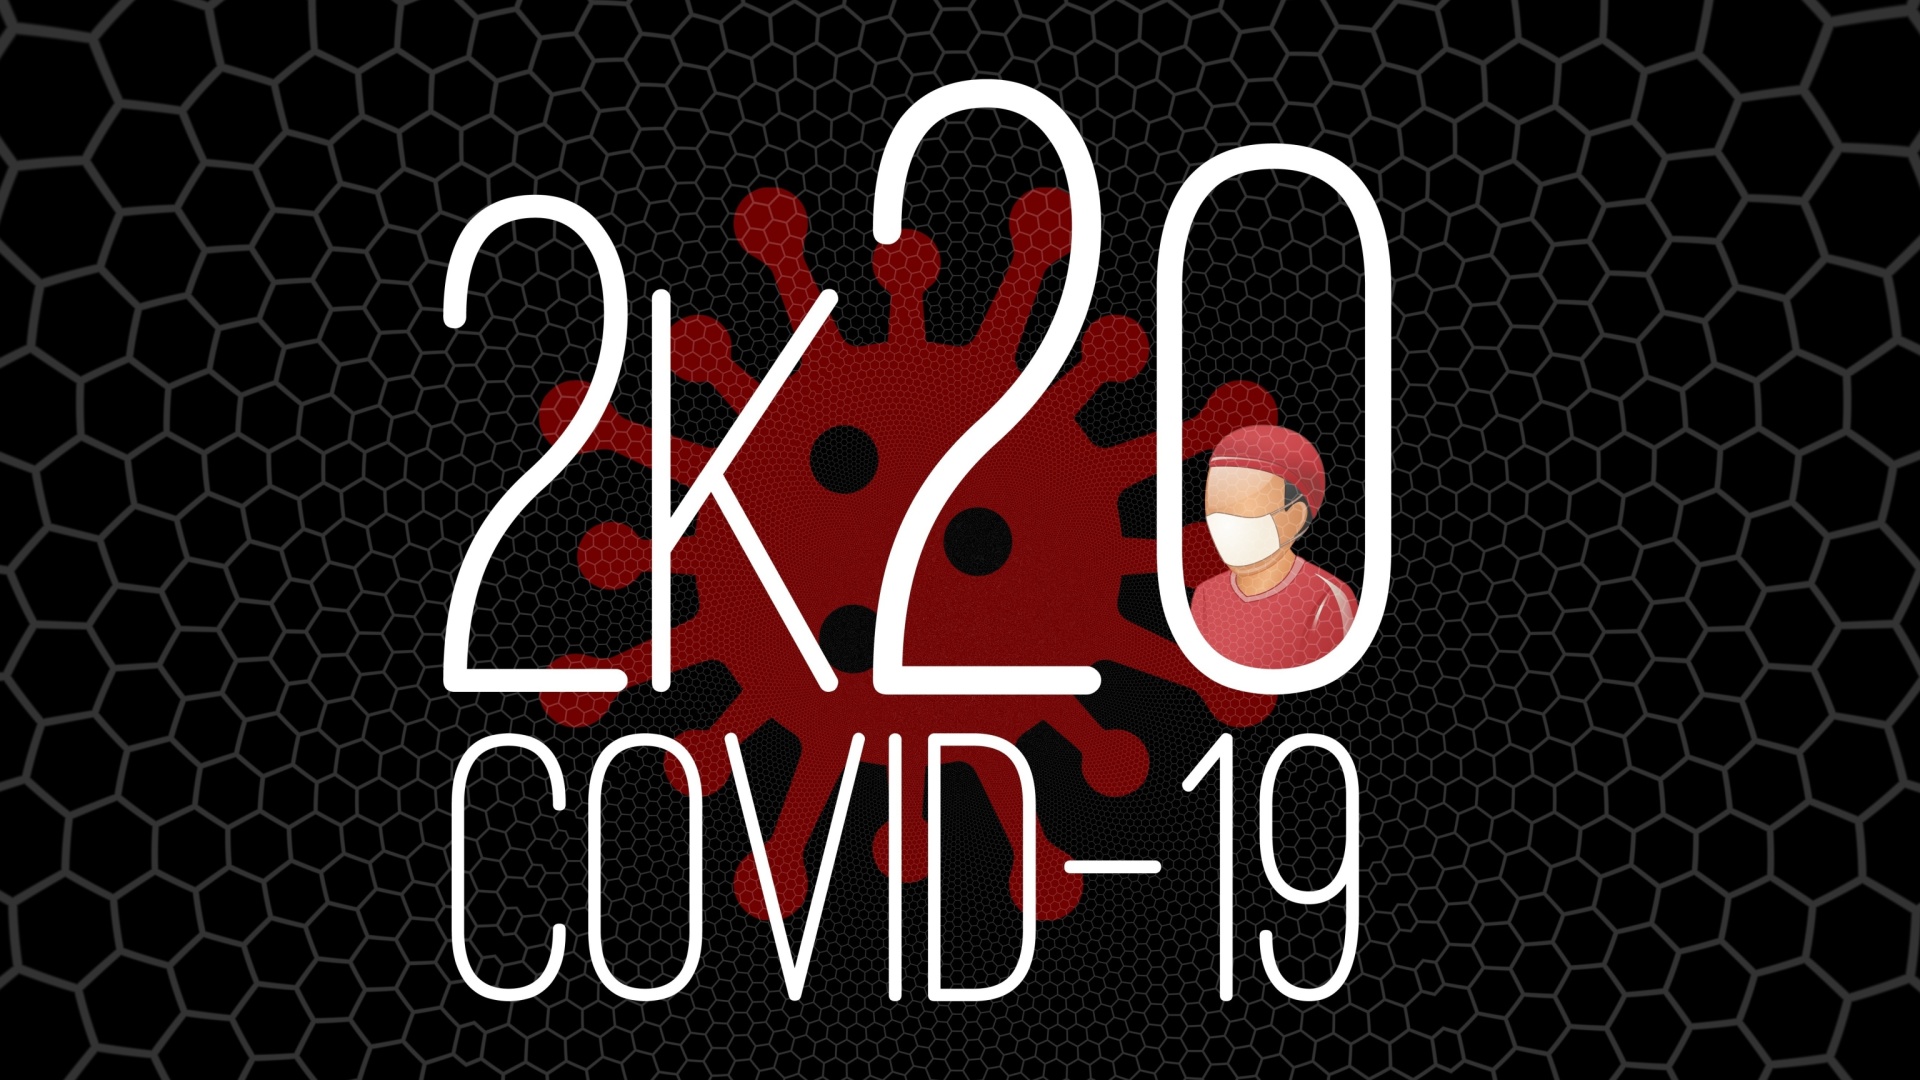 Coronavirus COVID 19 Pandemic 2020 wallpaper 1920x1080